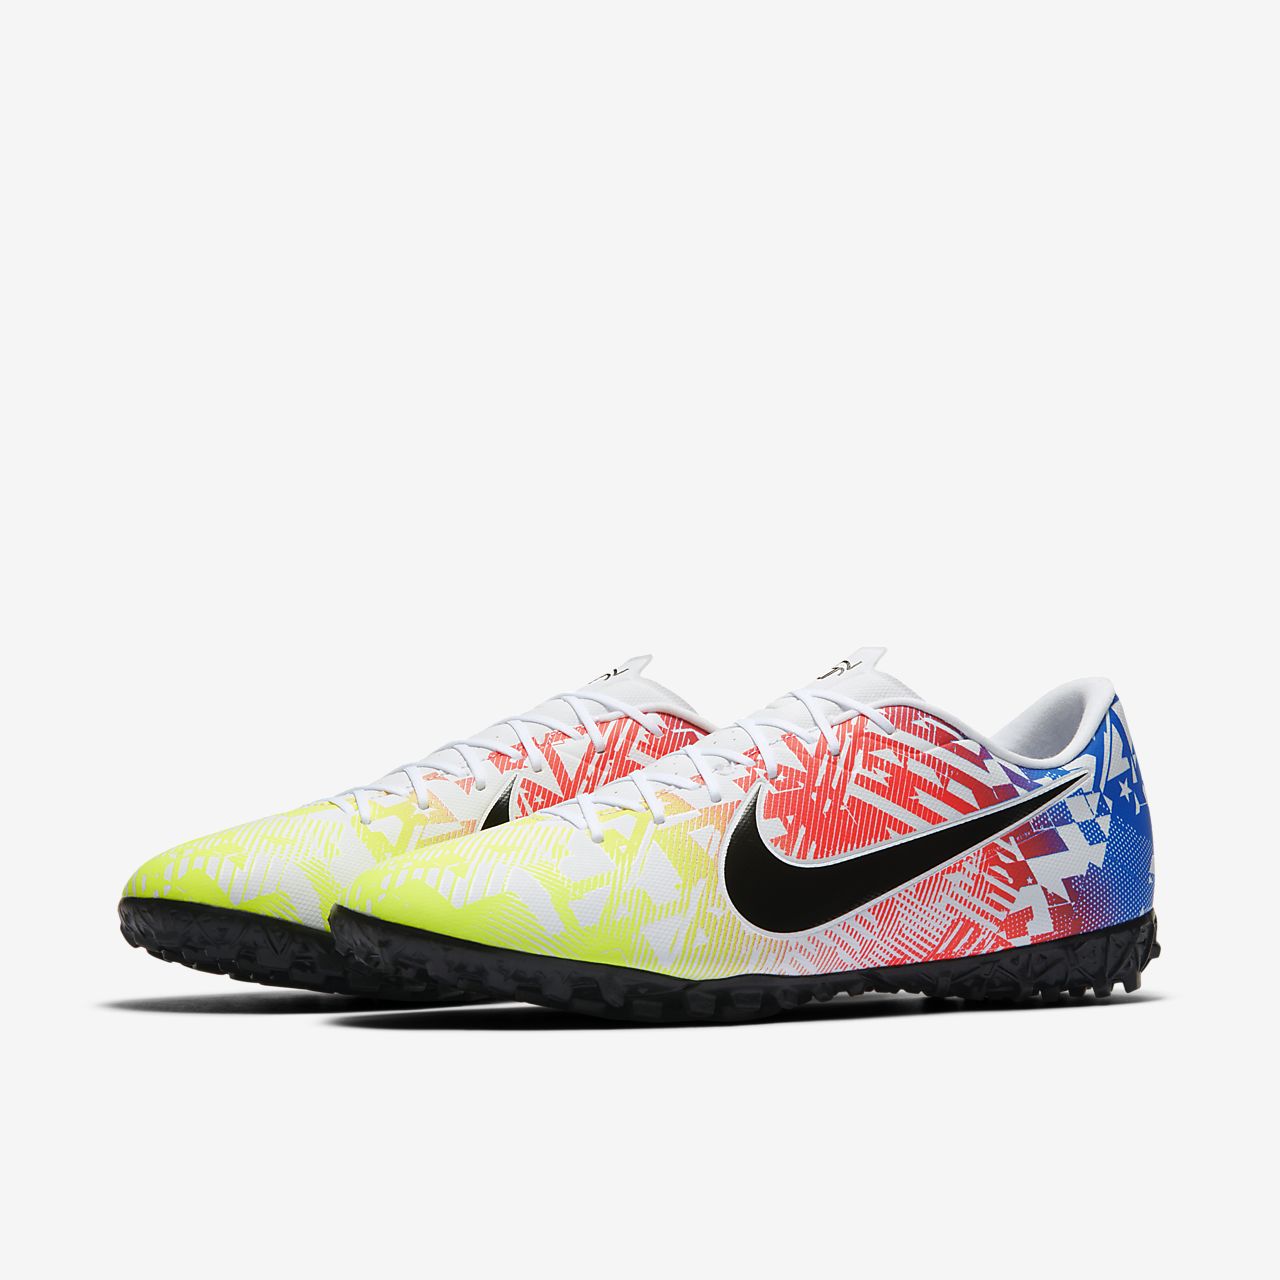 Nike Mercurial Vapor 13 Club TF Artificial Turf Football Shoe